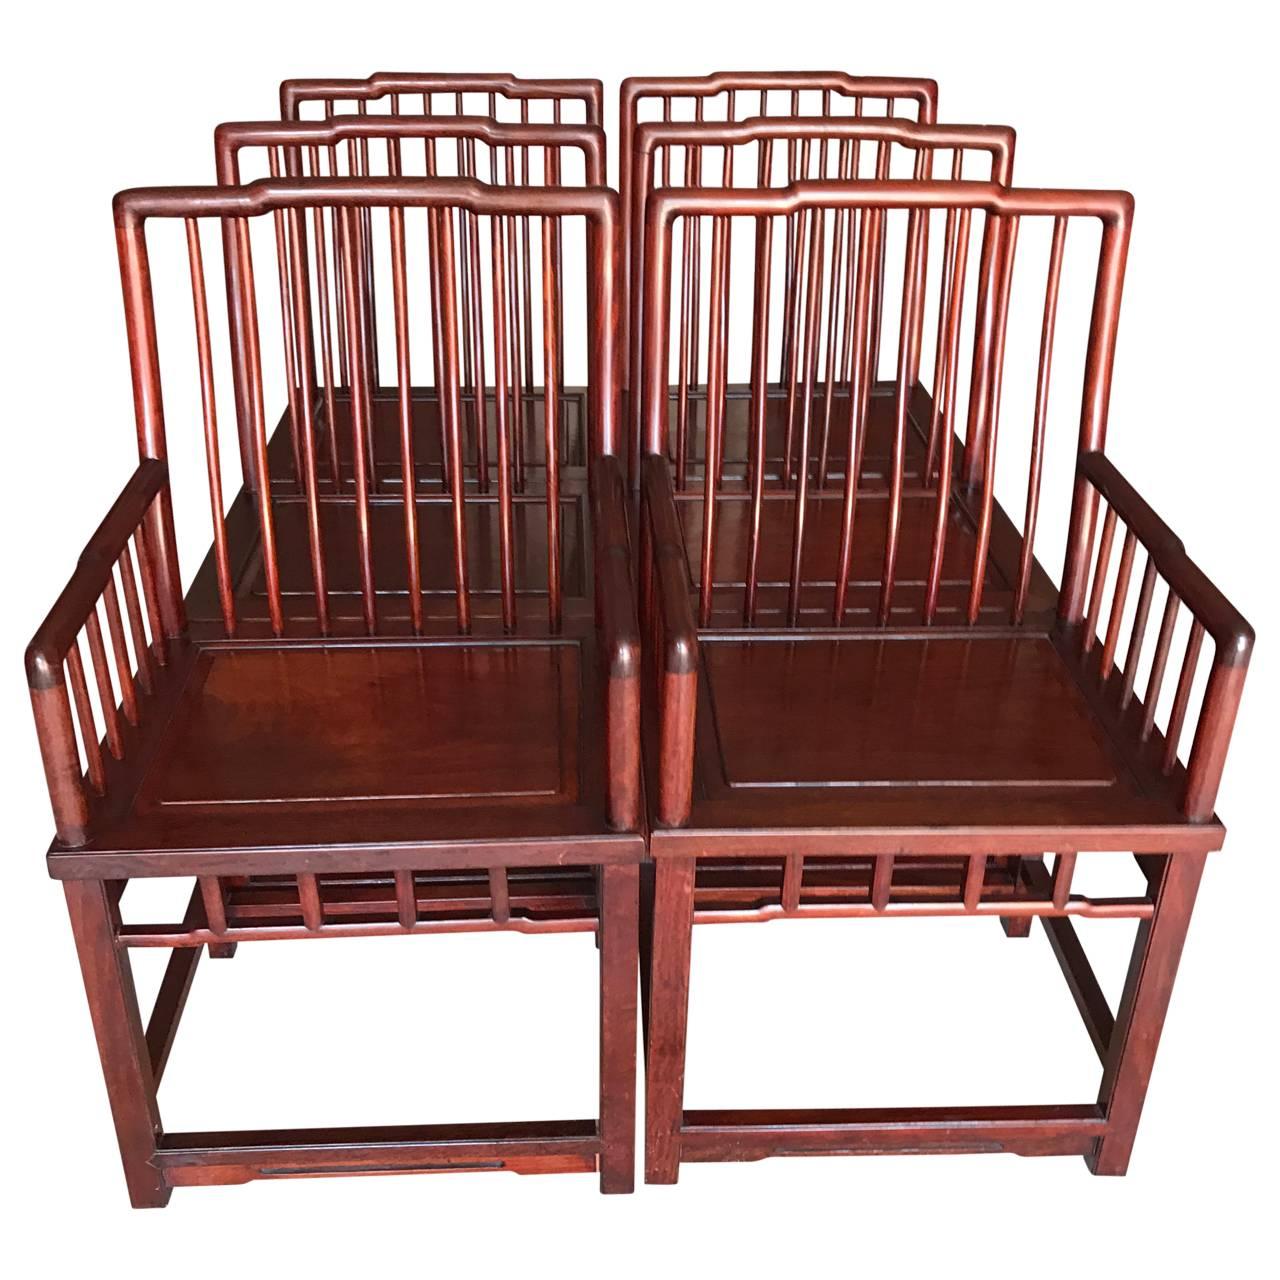 20th Century Set of Six Elegant Chinese Hardwood Dining Room Chairs